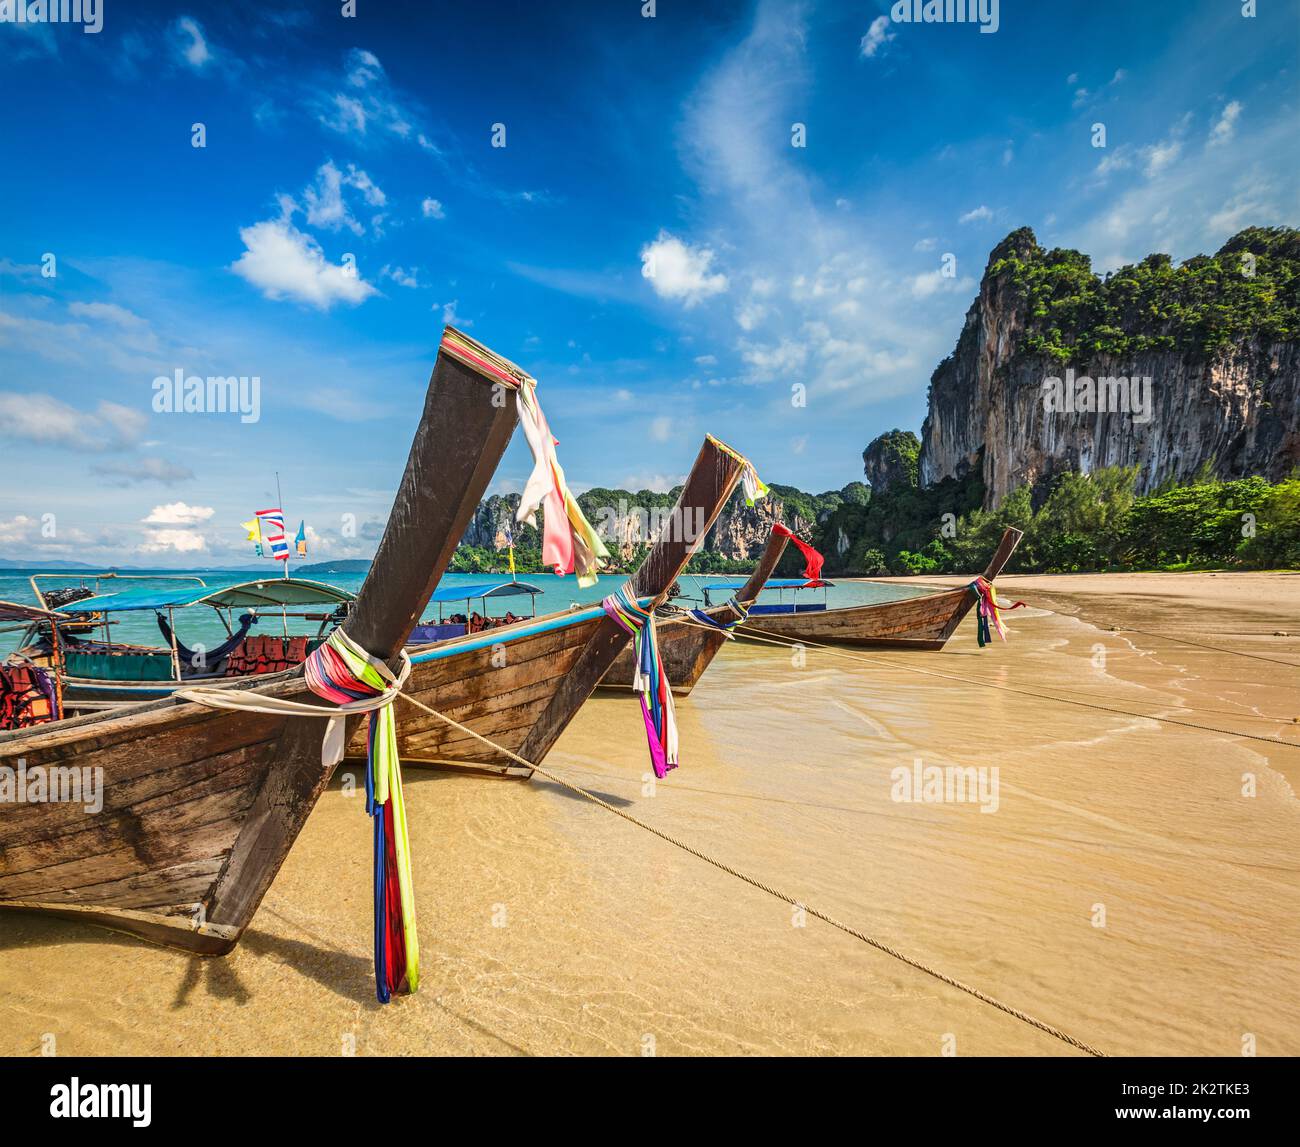 Long tail boats on beach, Thailand Stock Photo